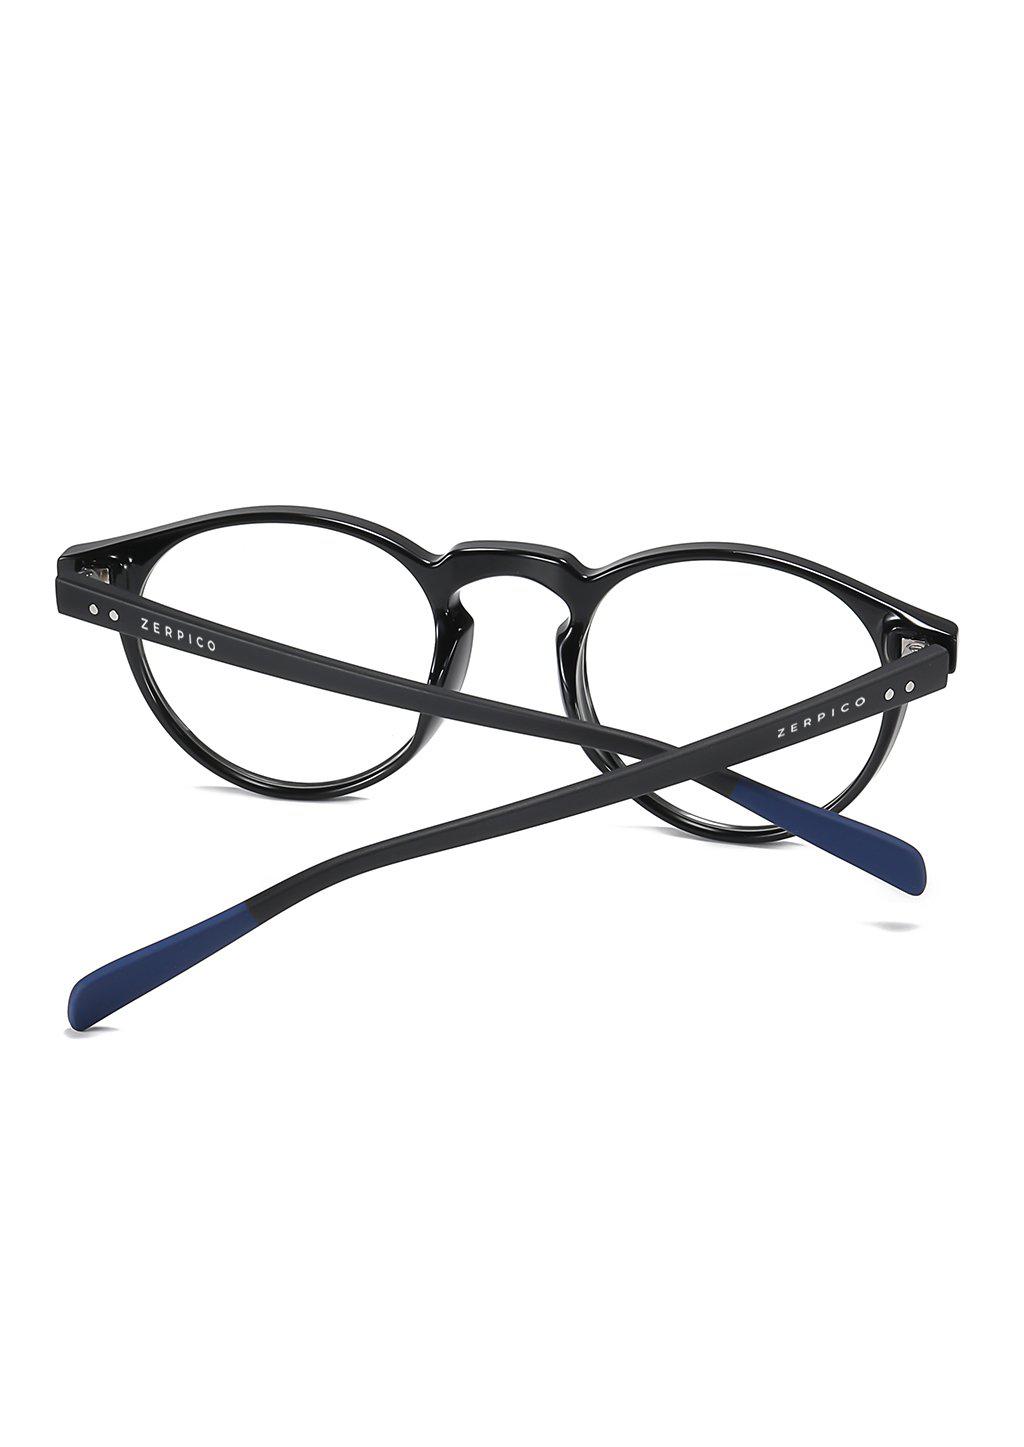 Nexus - Blue-light glasses - Holo-3